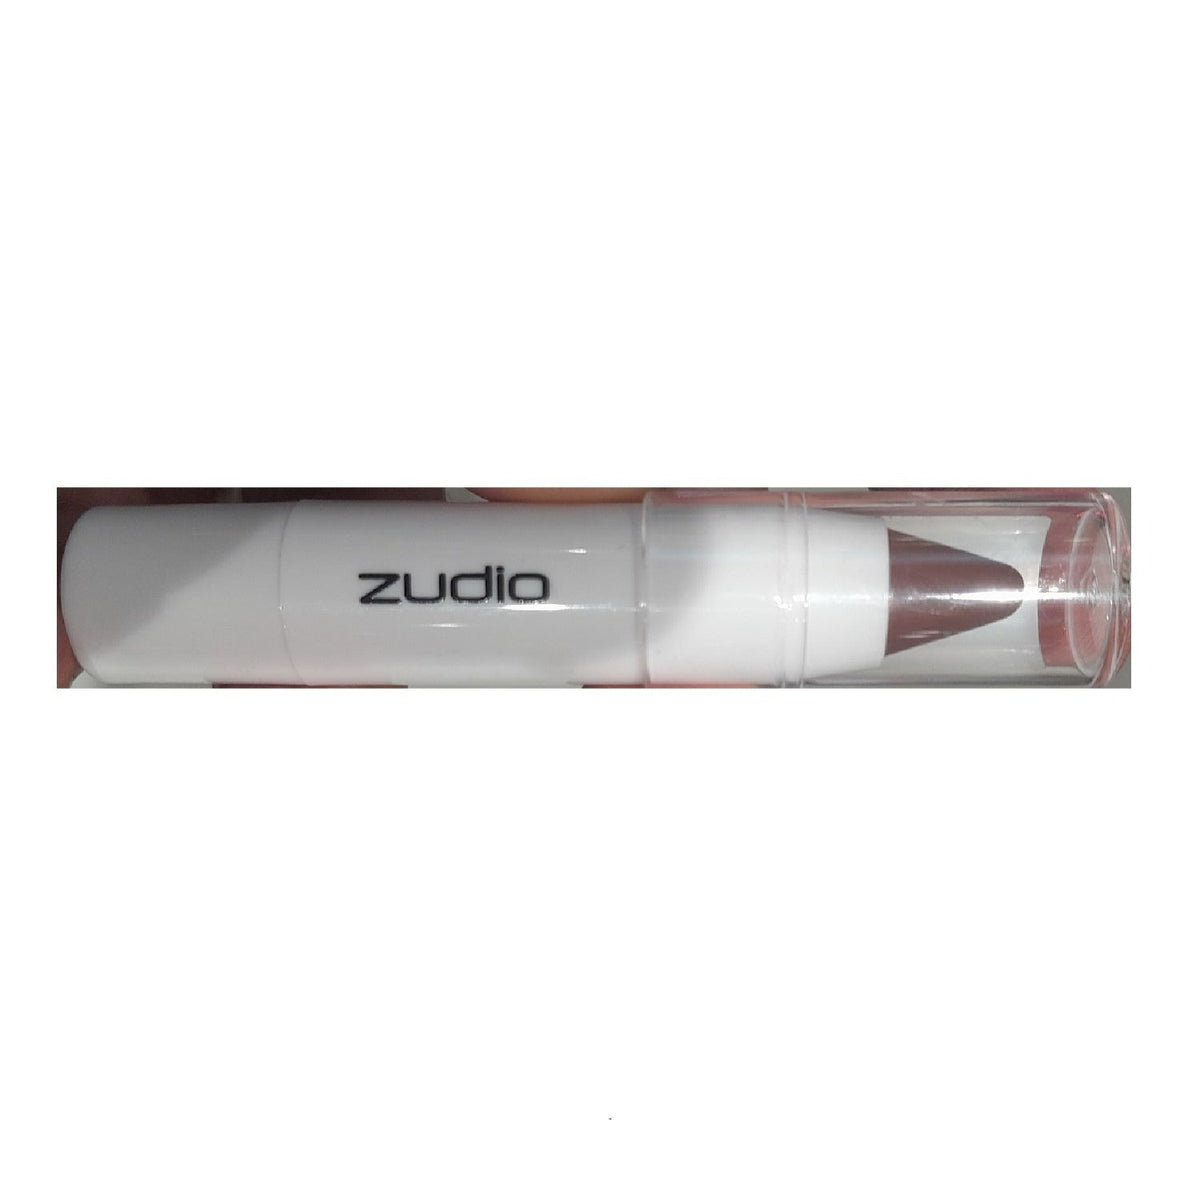 Tata Zudio Lipstick Matte True Nude N1 Color 2g